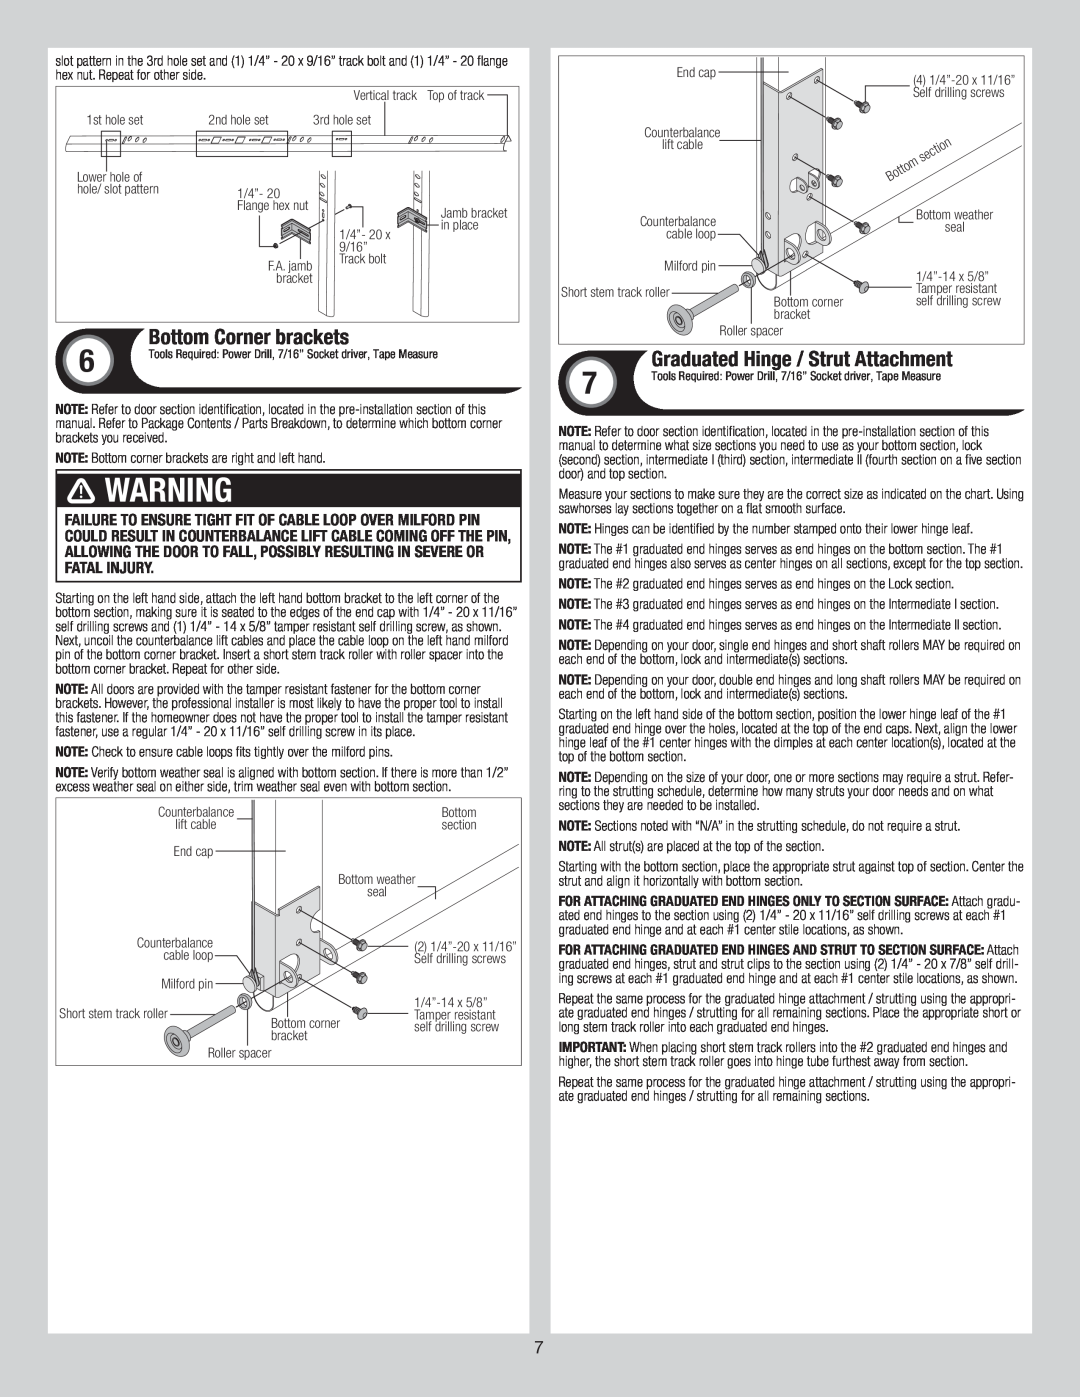 Wayne-Dalton 6600 installation instructions Bottom Corner brackets, Graduated Hinge / Strut Attachment, WarningARNING 